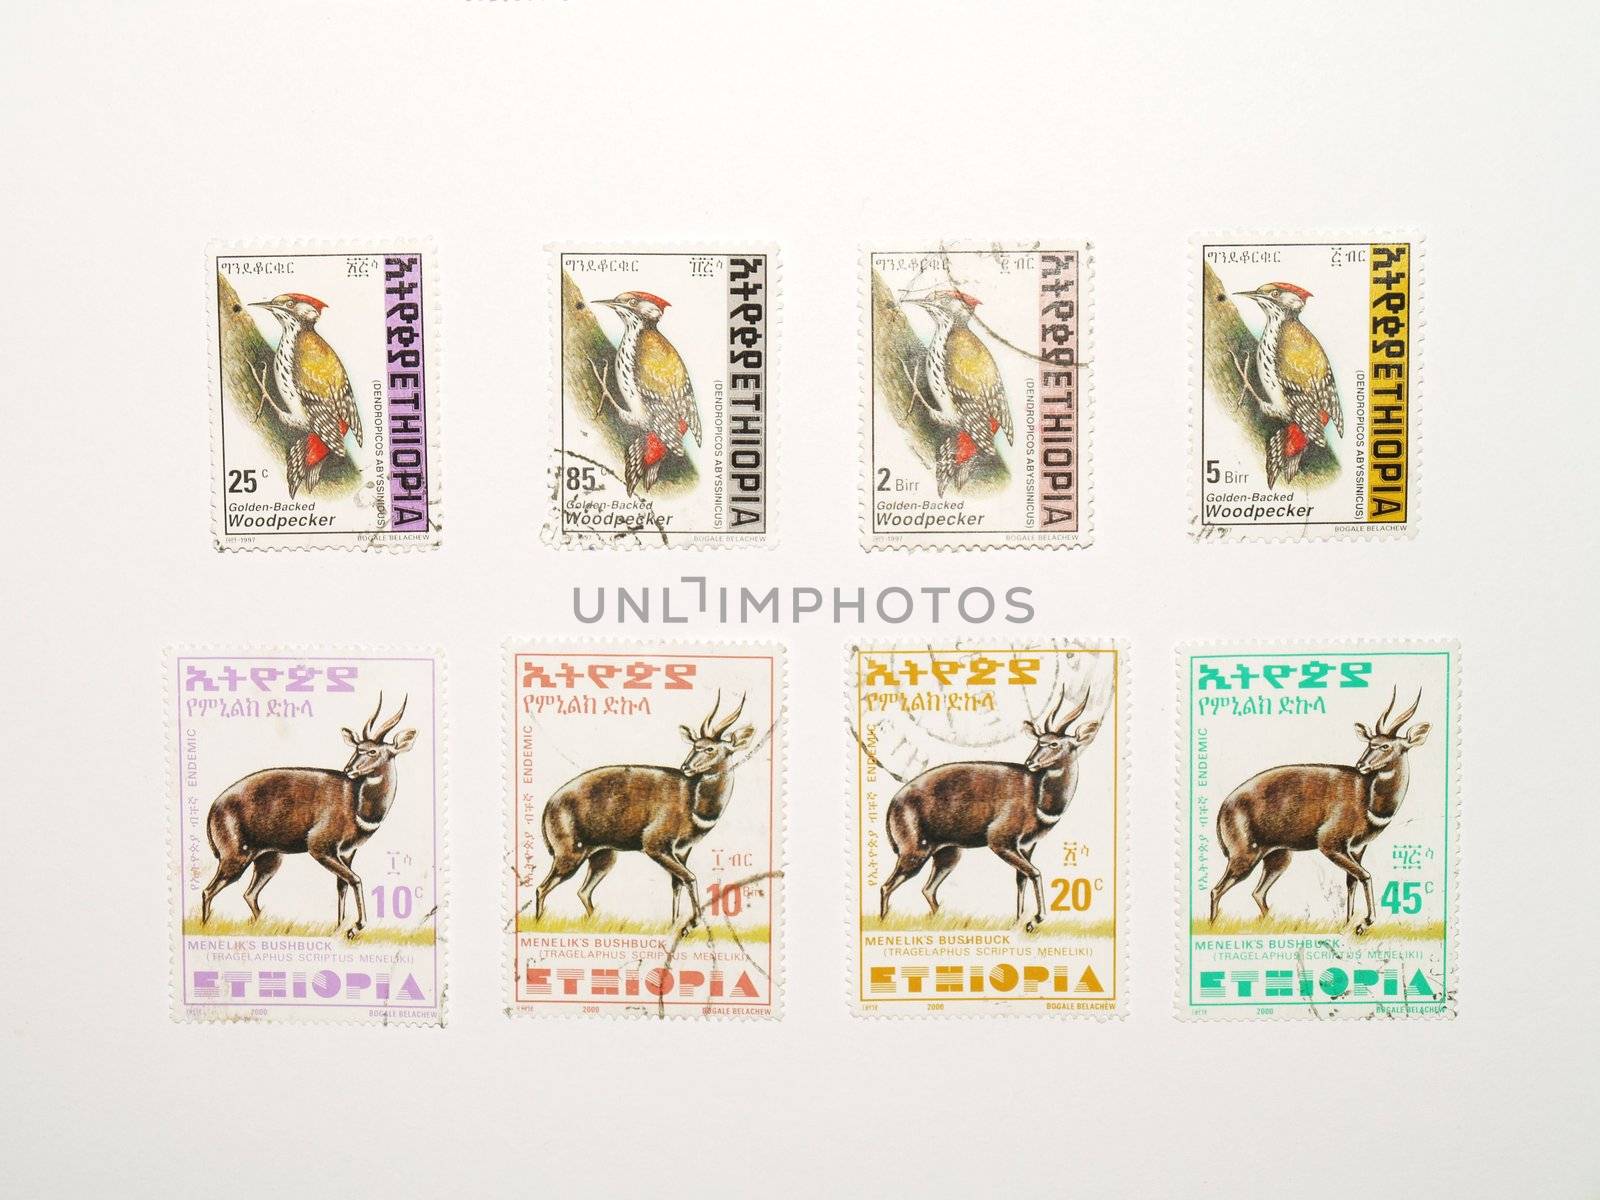 Ethiopian stamps by viviolsen